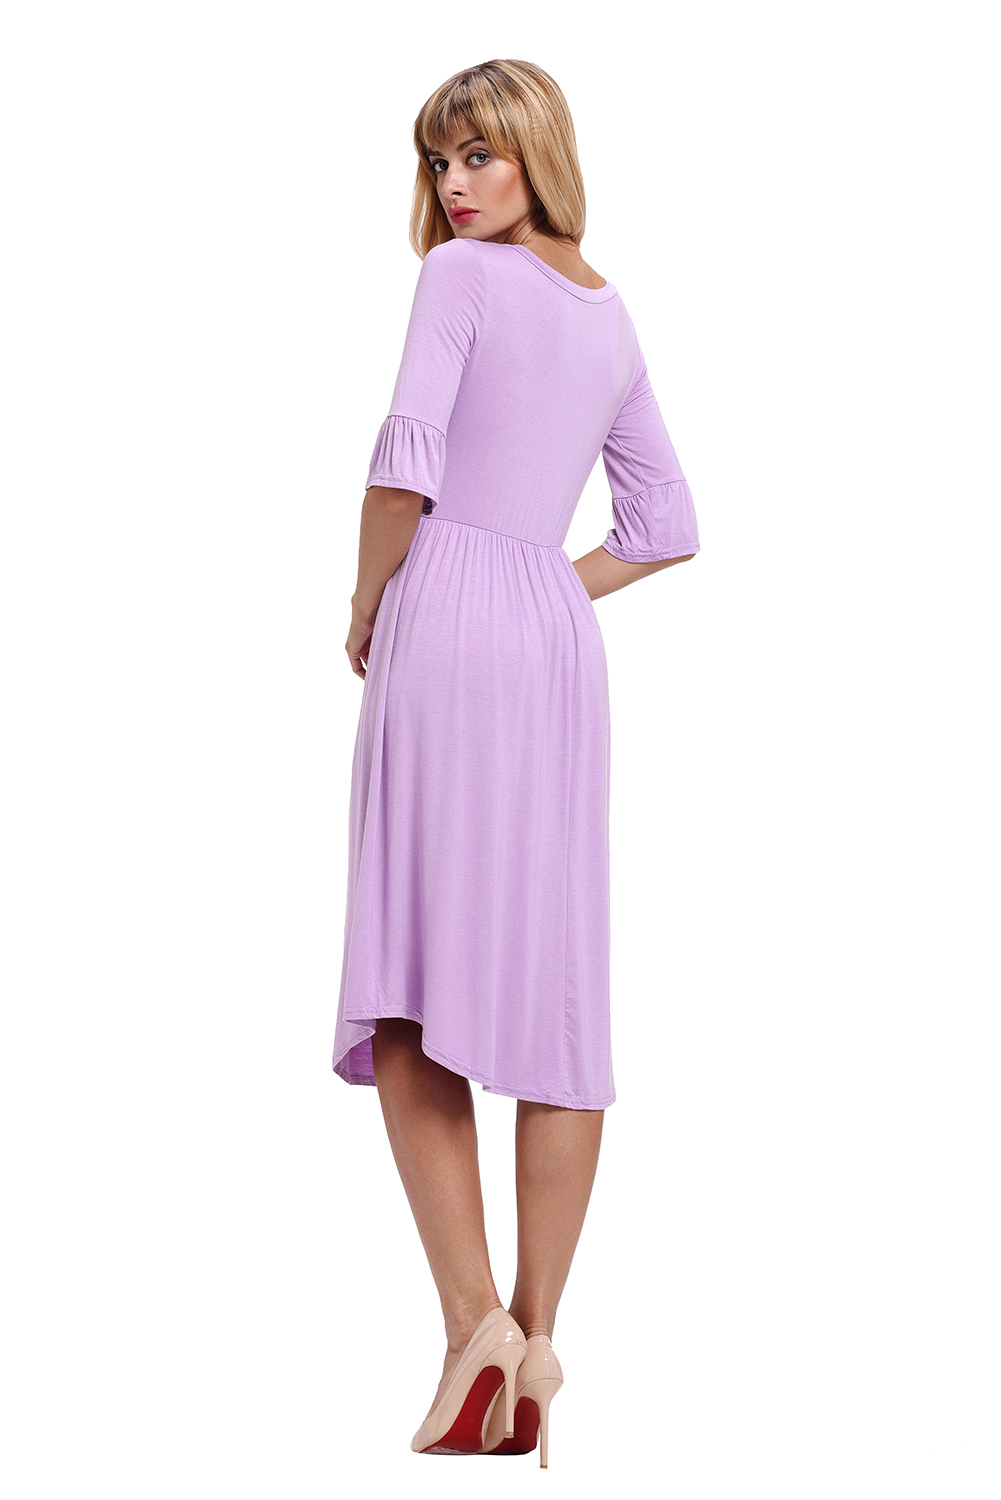 BY61652-8 Purple Ruffle Sleeve Midi Jersey Dress